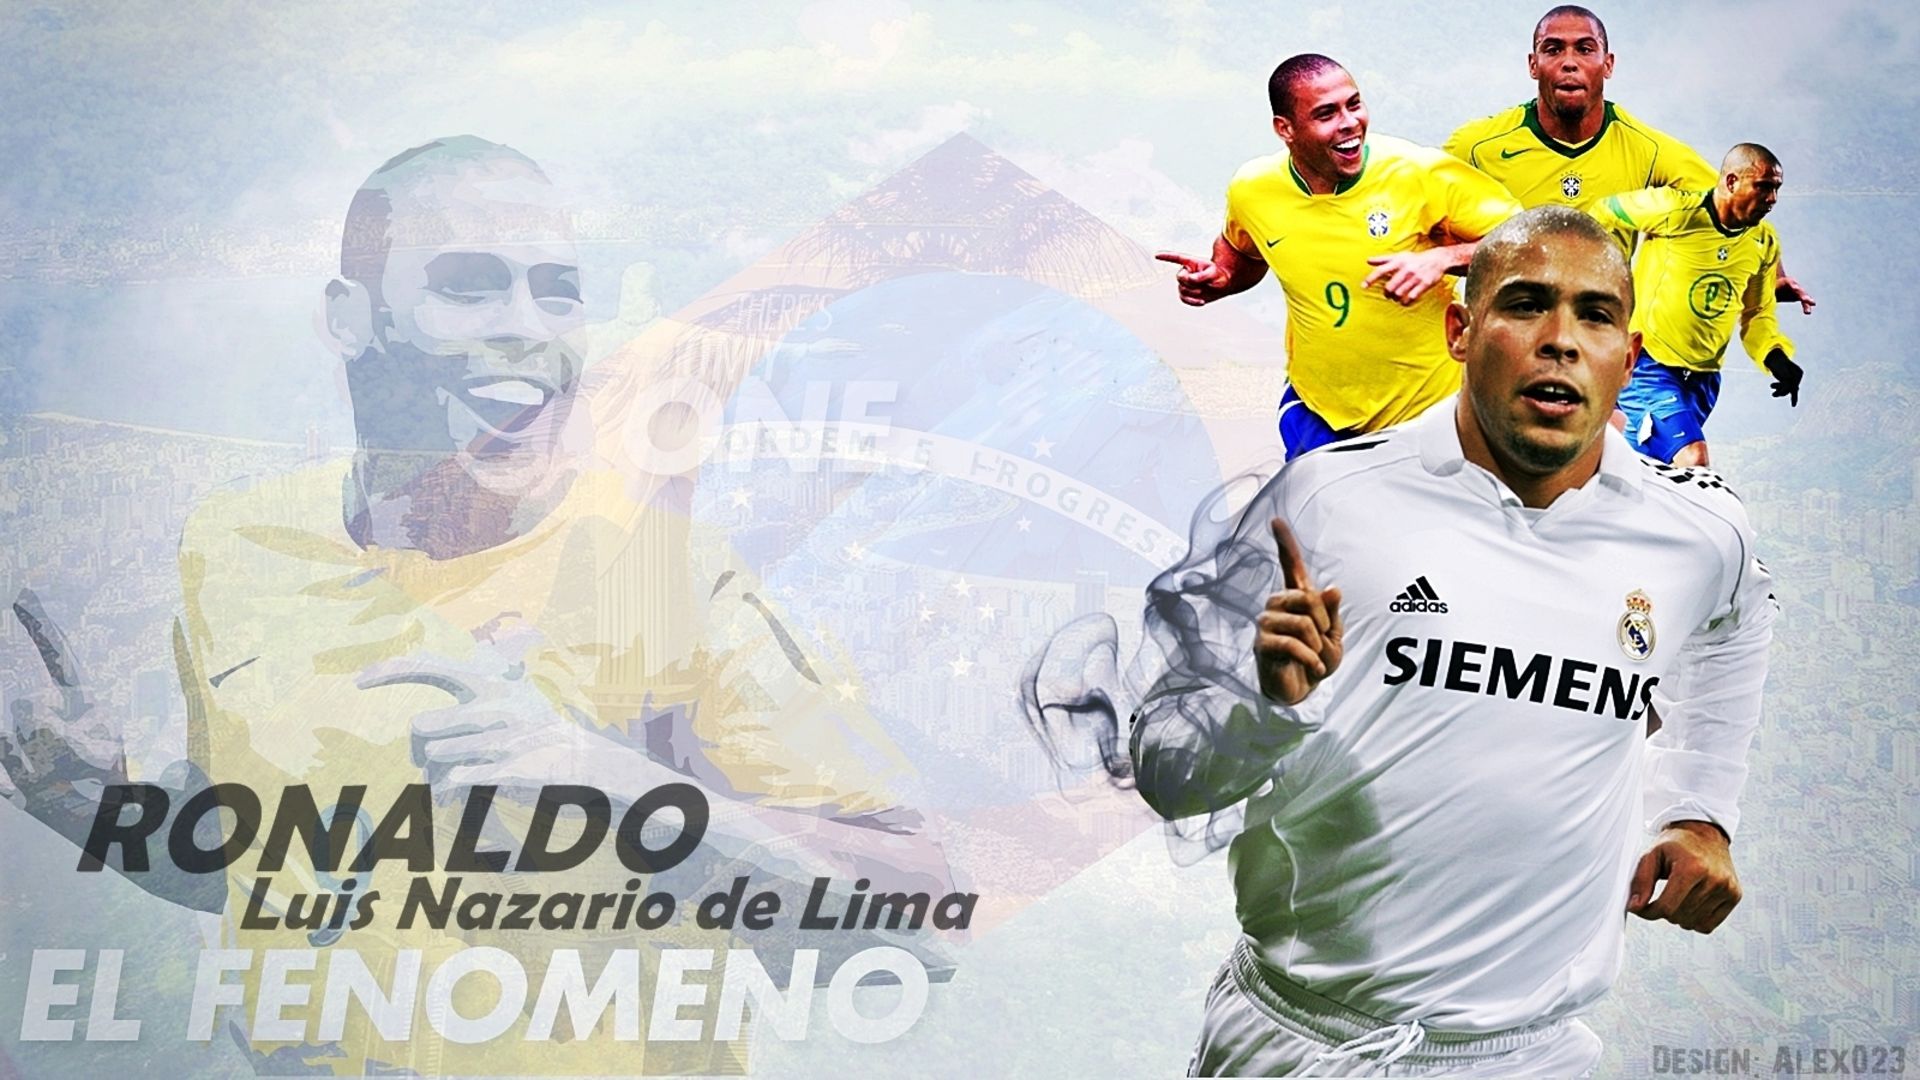 sports, ronaldo nazário, brazil national football team, real madrid c f, soccer